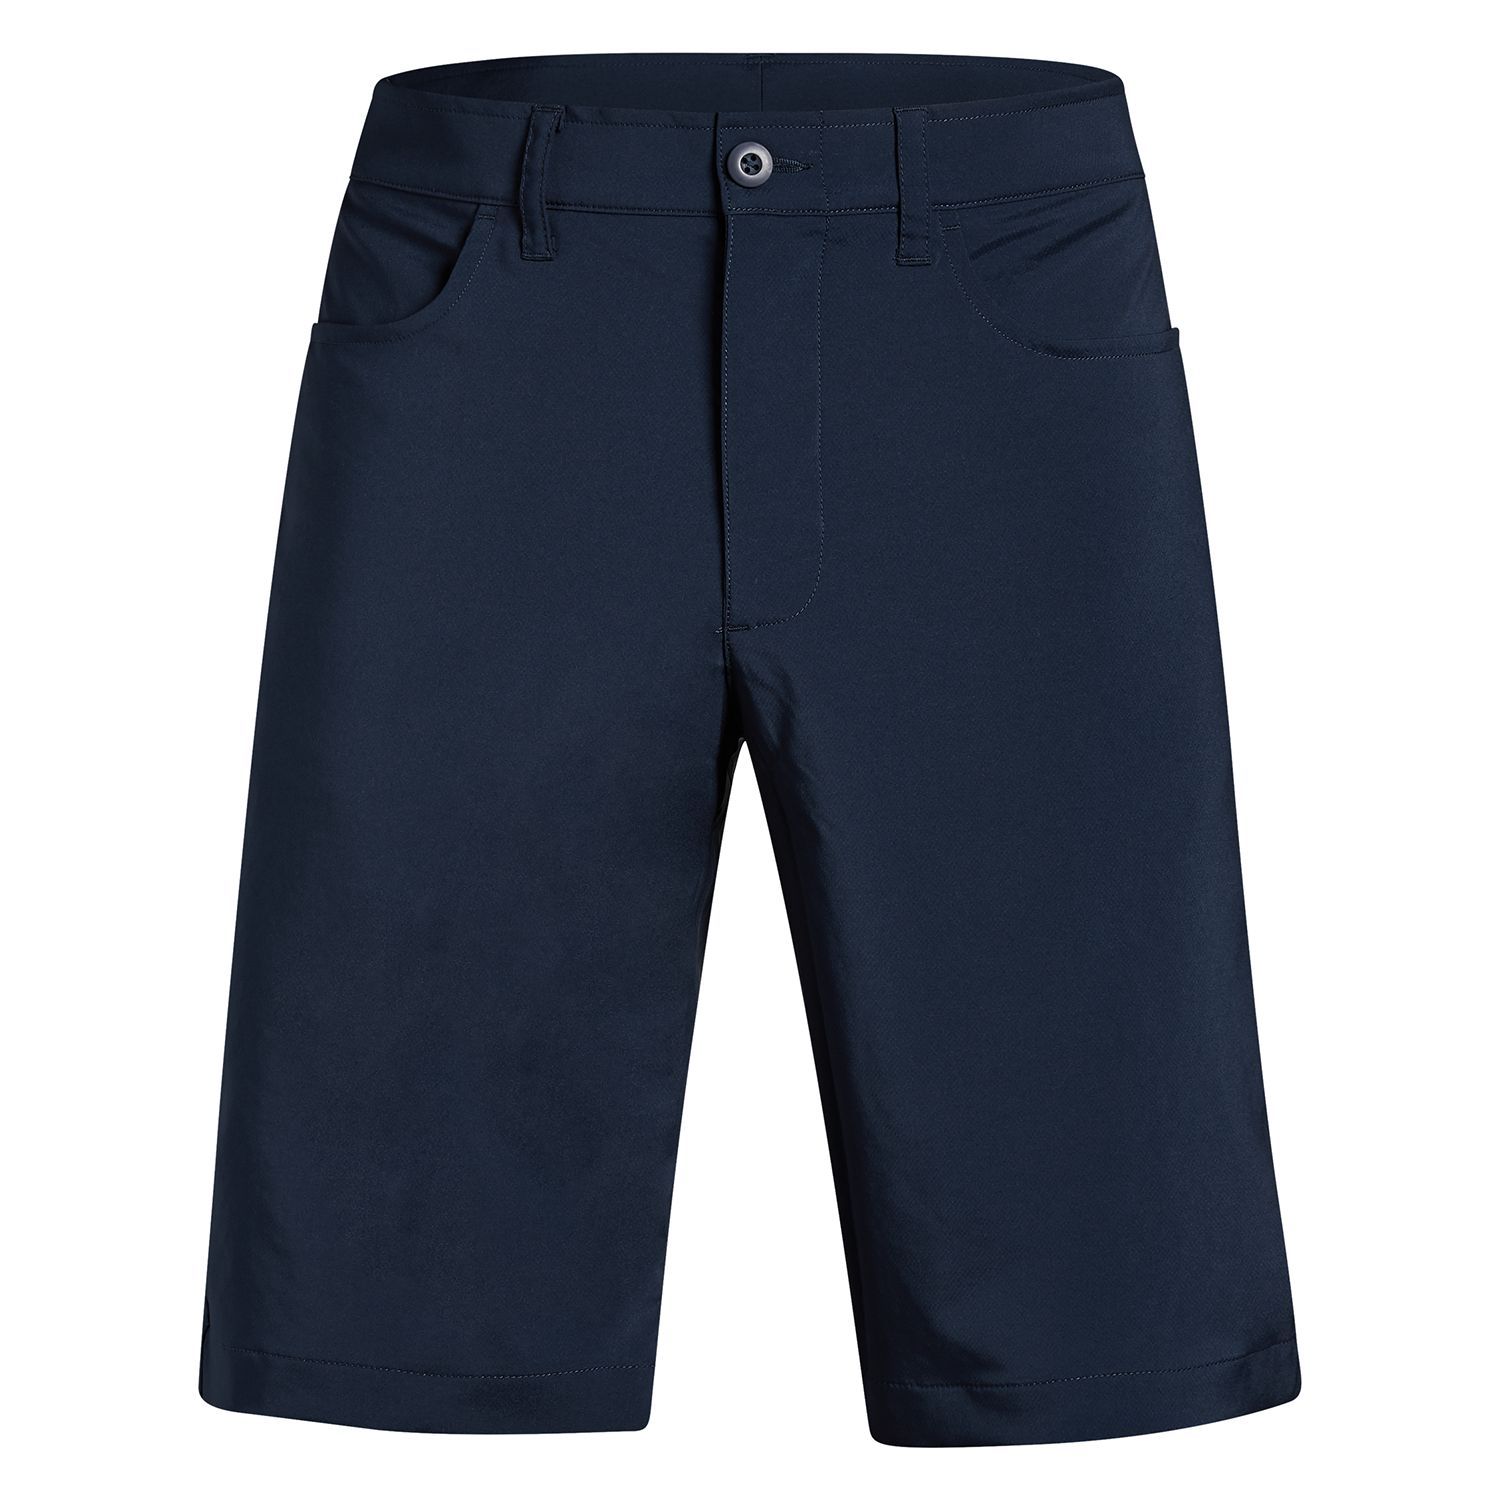 blue under armour golf shorts